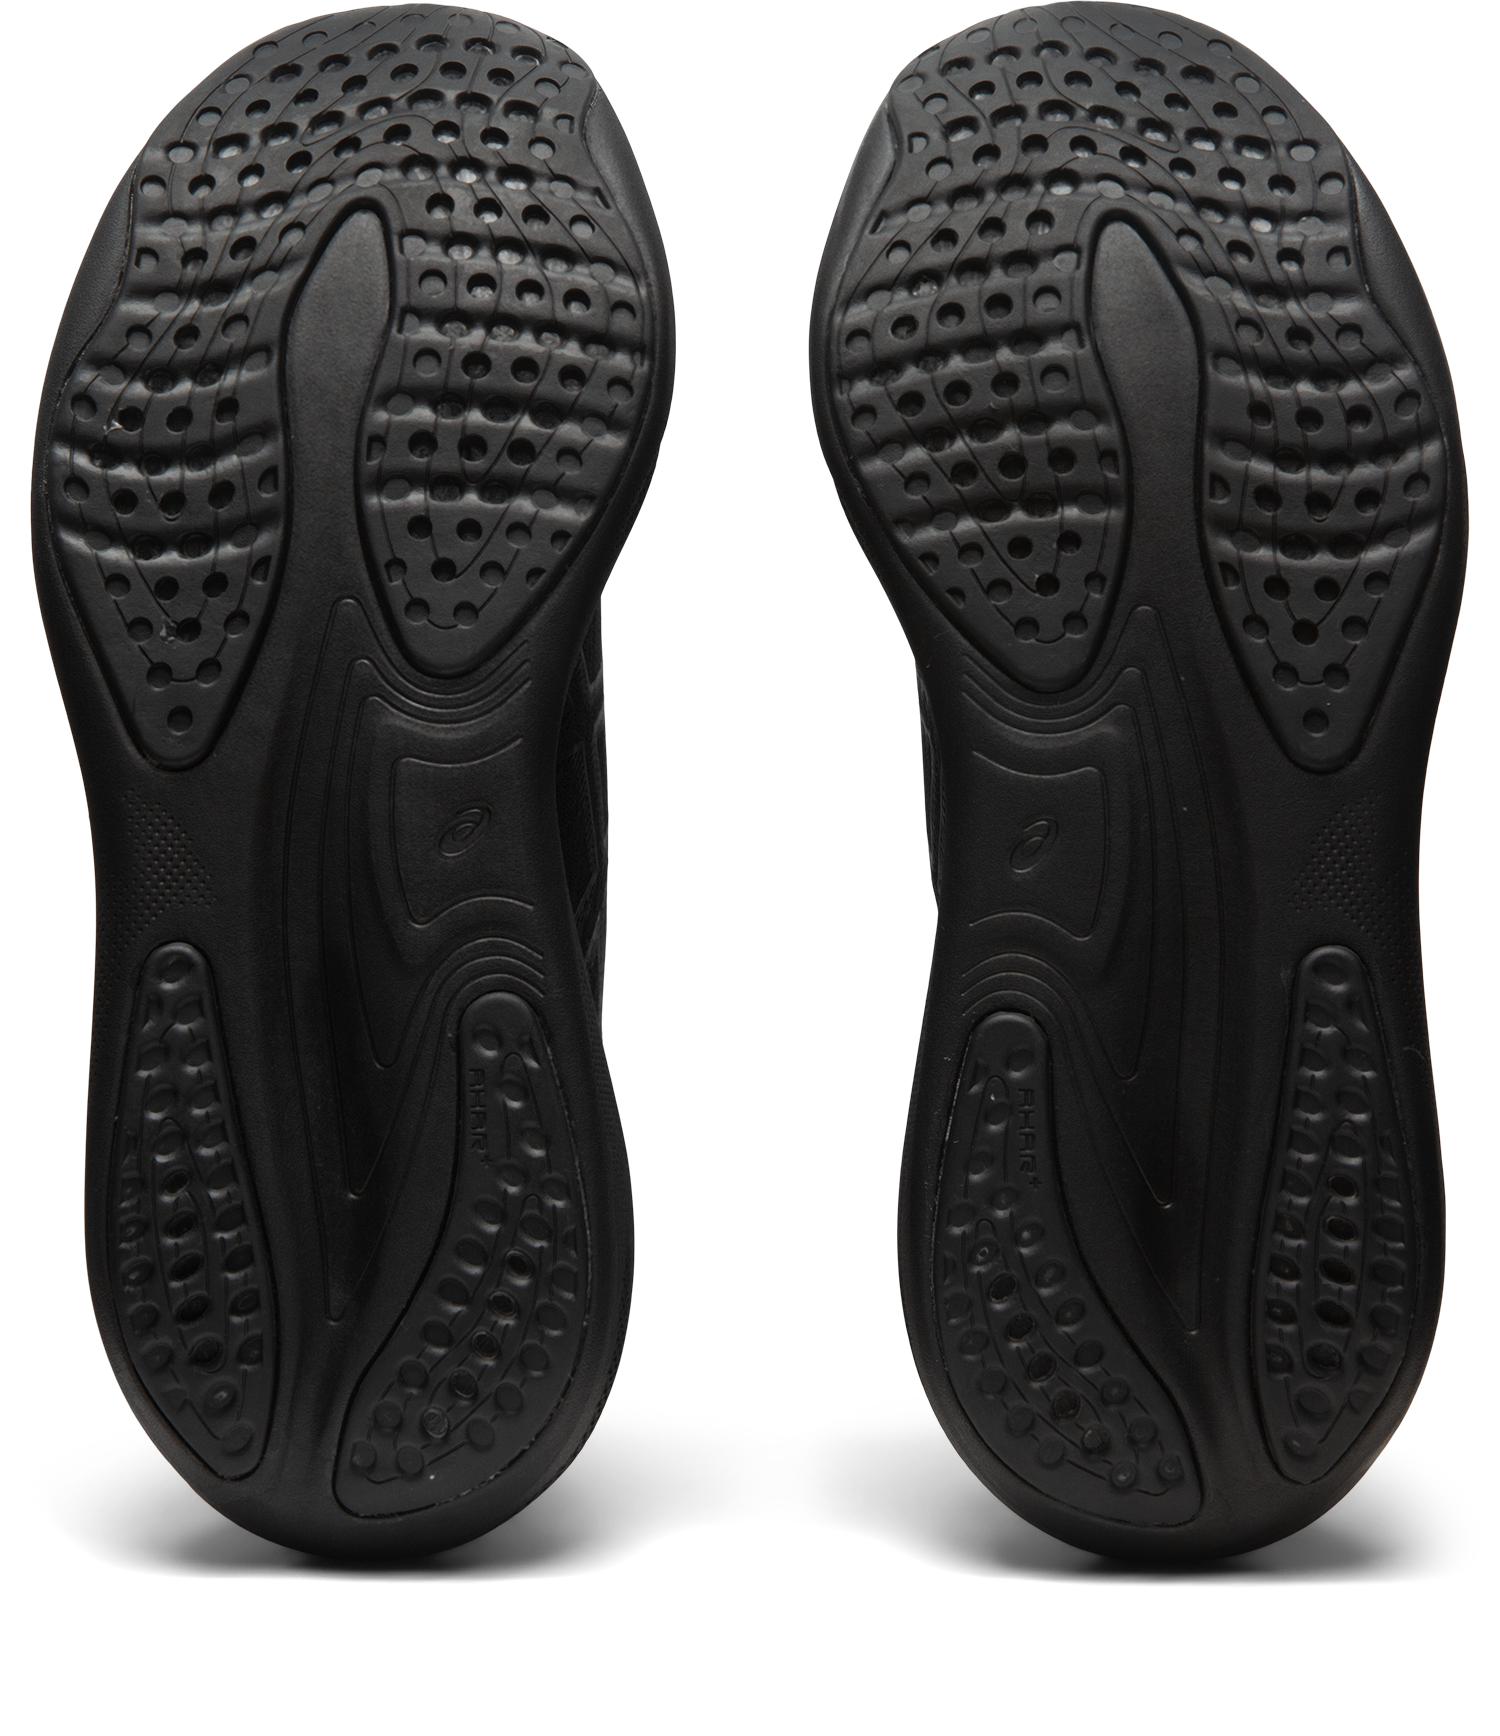 Asics Men's Gel-Nimbus 25 Running Shoes in Black/Black